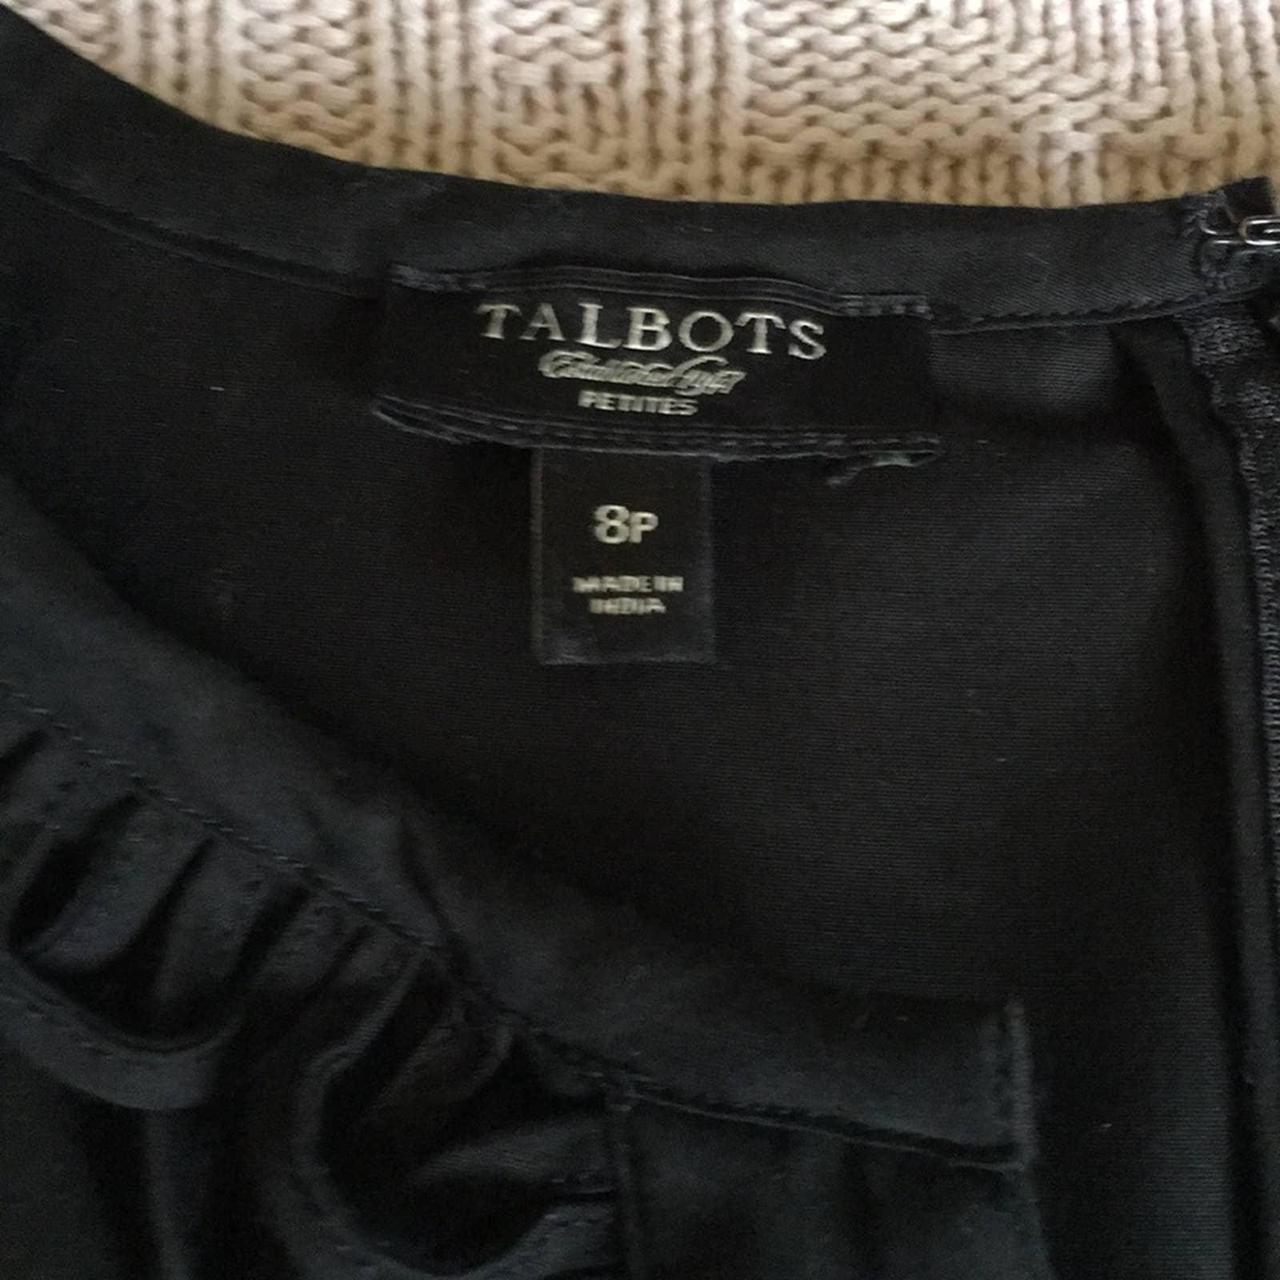 Talbots Black Womens Size 8P Dress